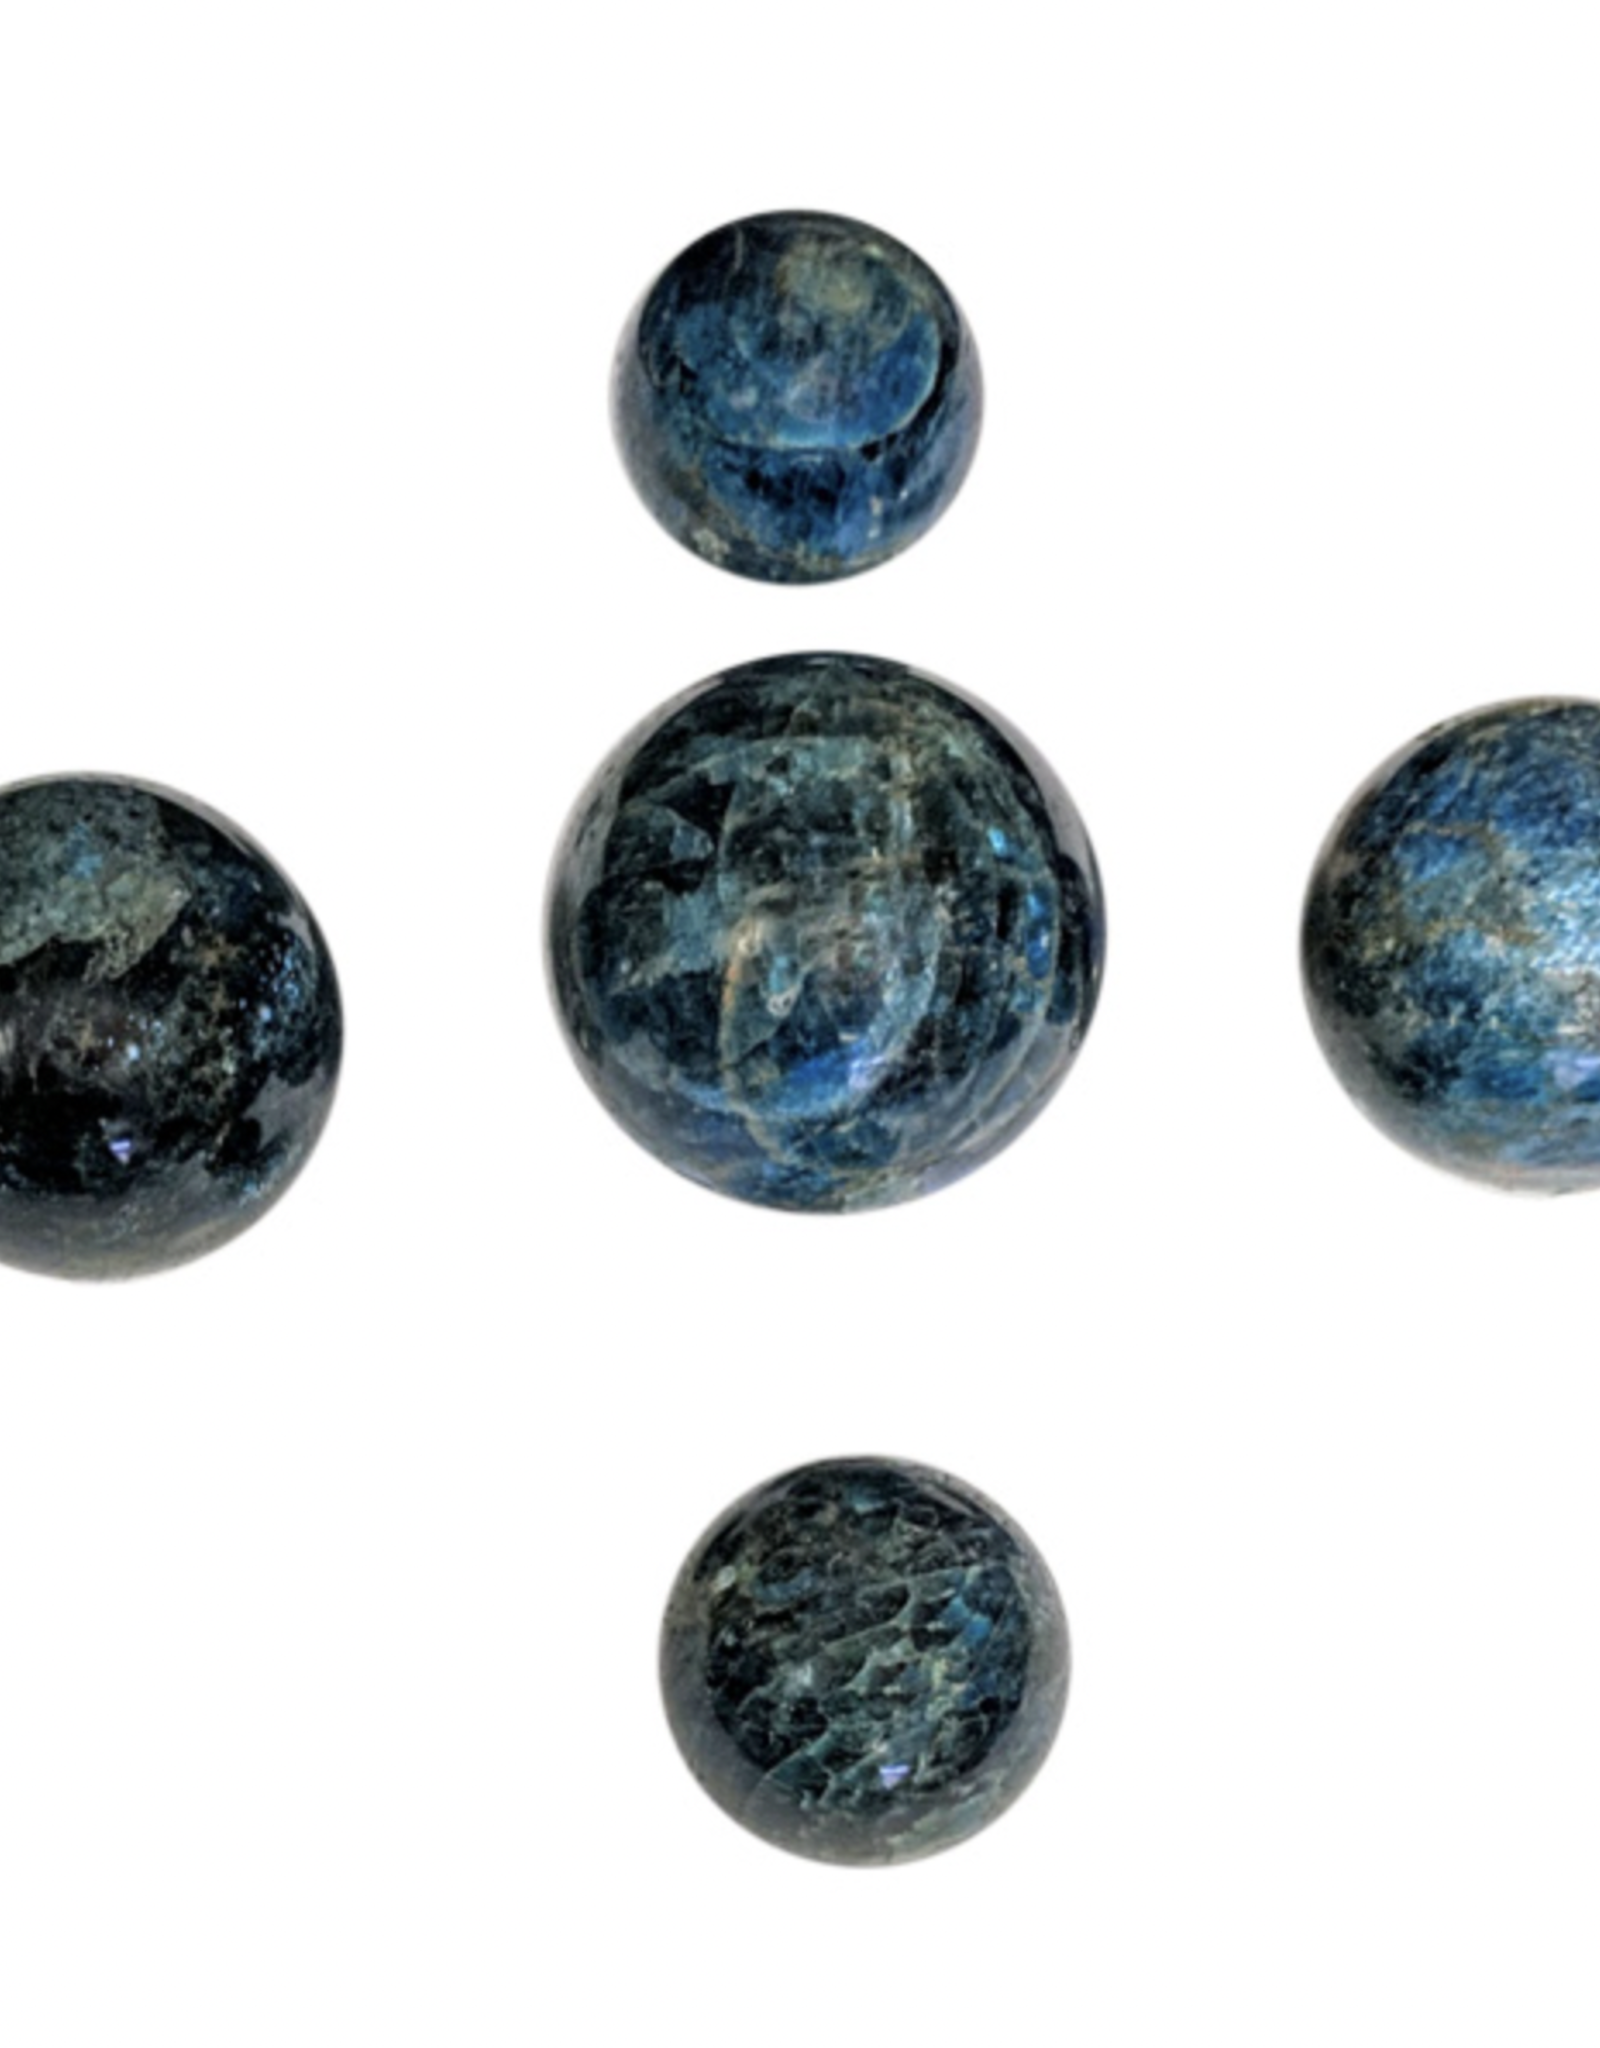 Sphere - Blue Apatite